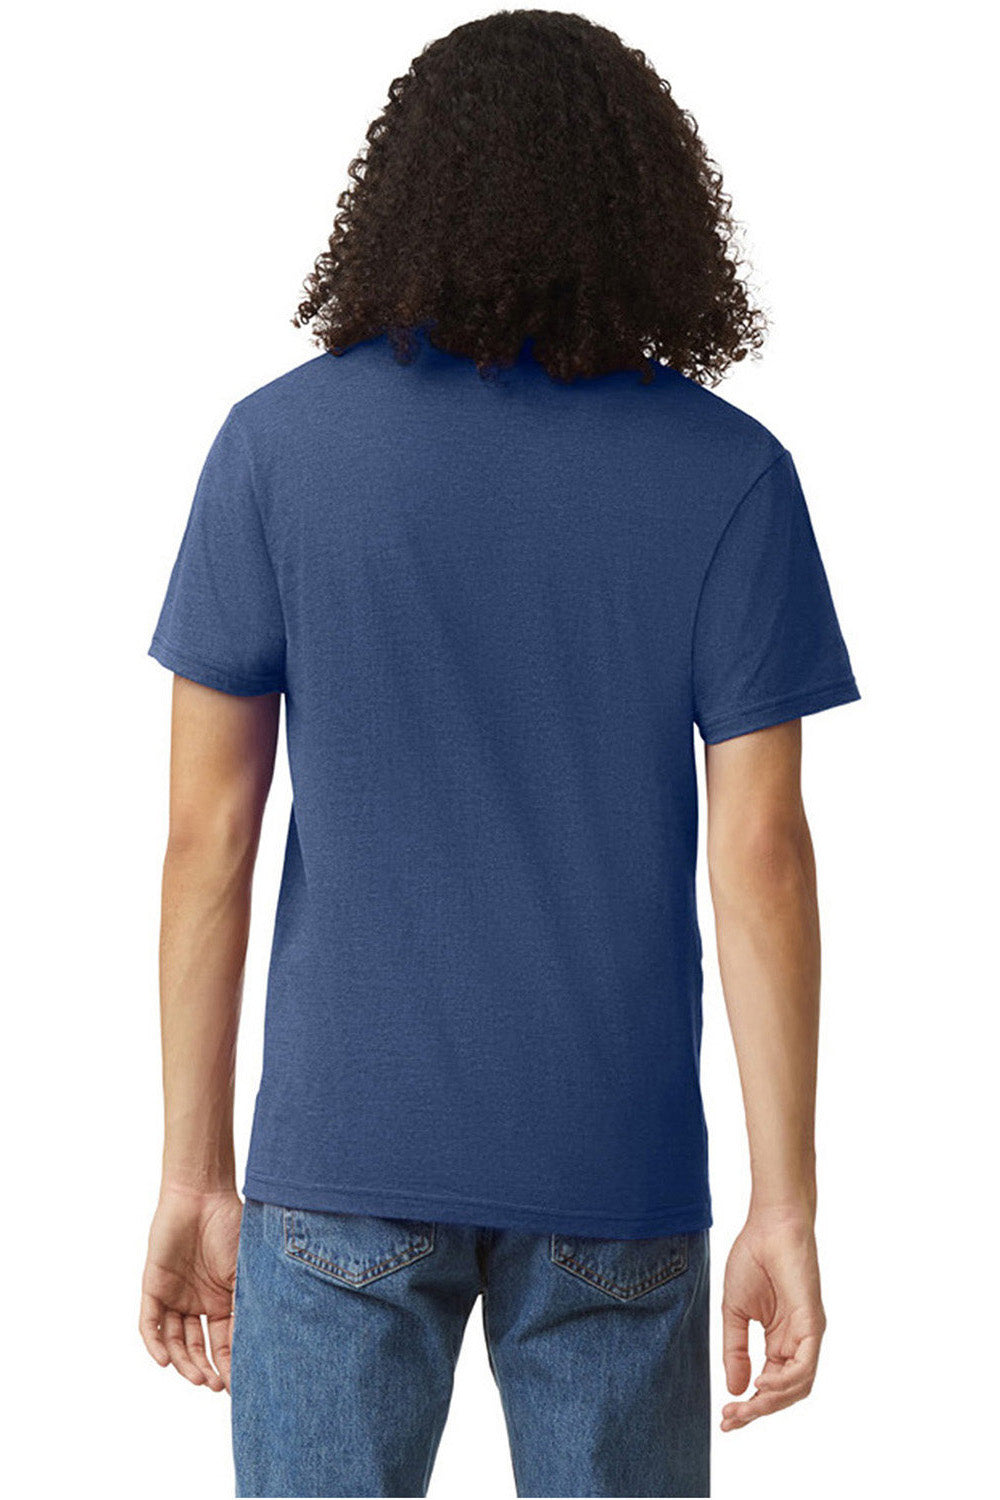 American Apparel 2006CVC Mens CVC Short Sleeve V-Neck T-Shirt Heather Arctic Blue Model Back